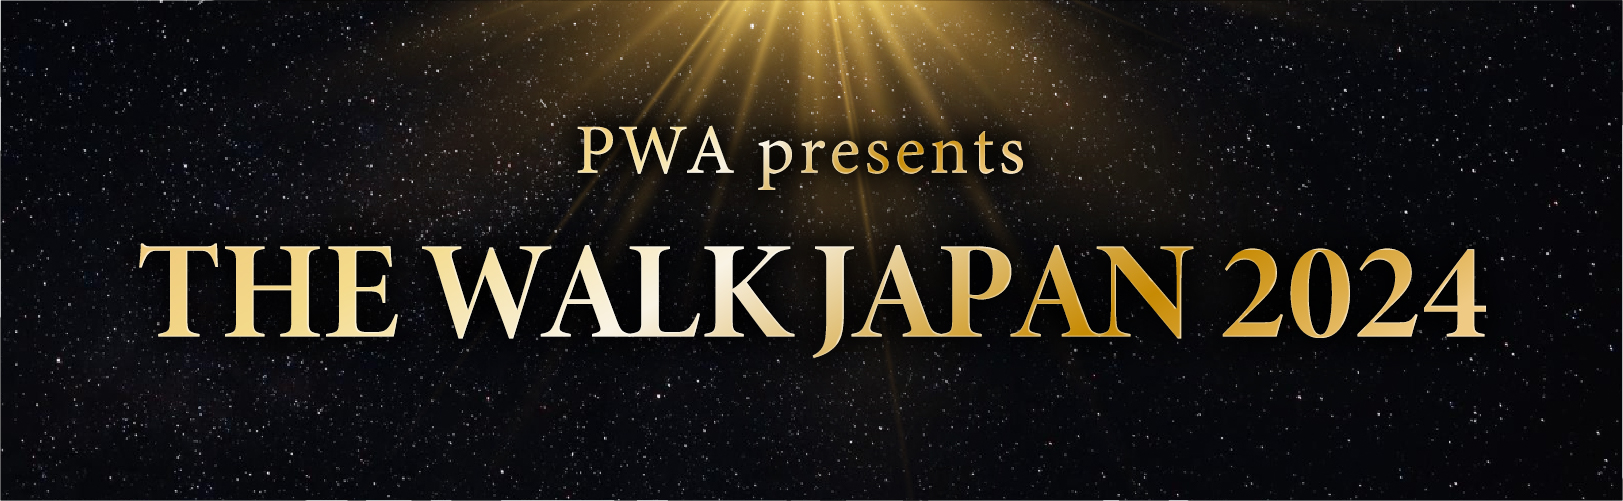 THE WALK JAPANバナー